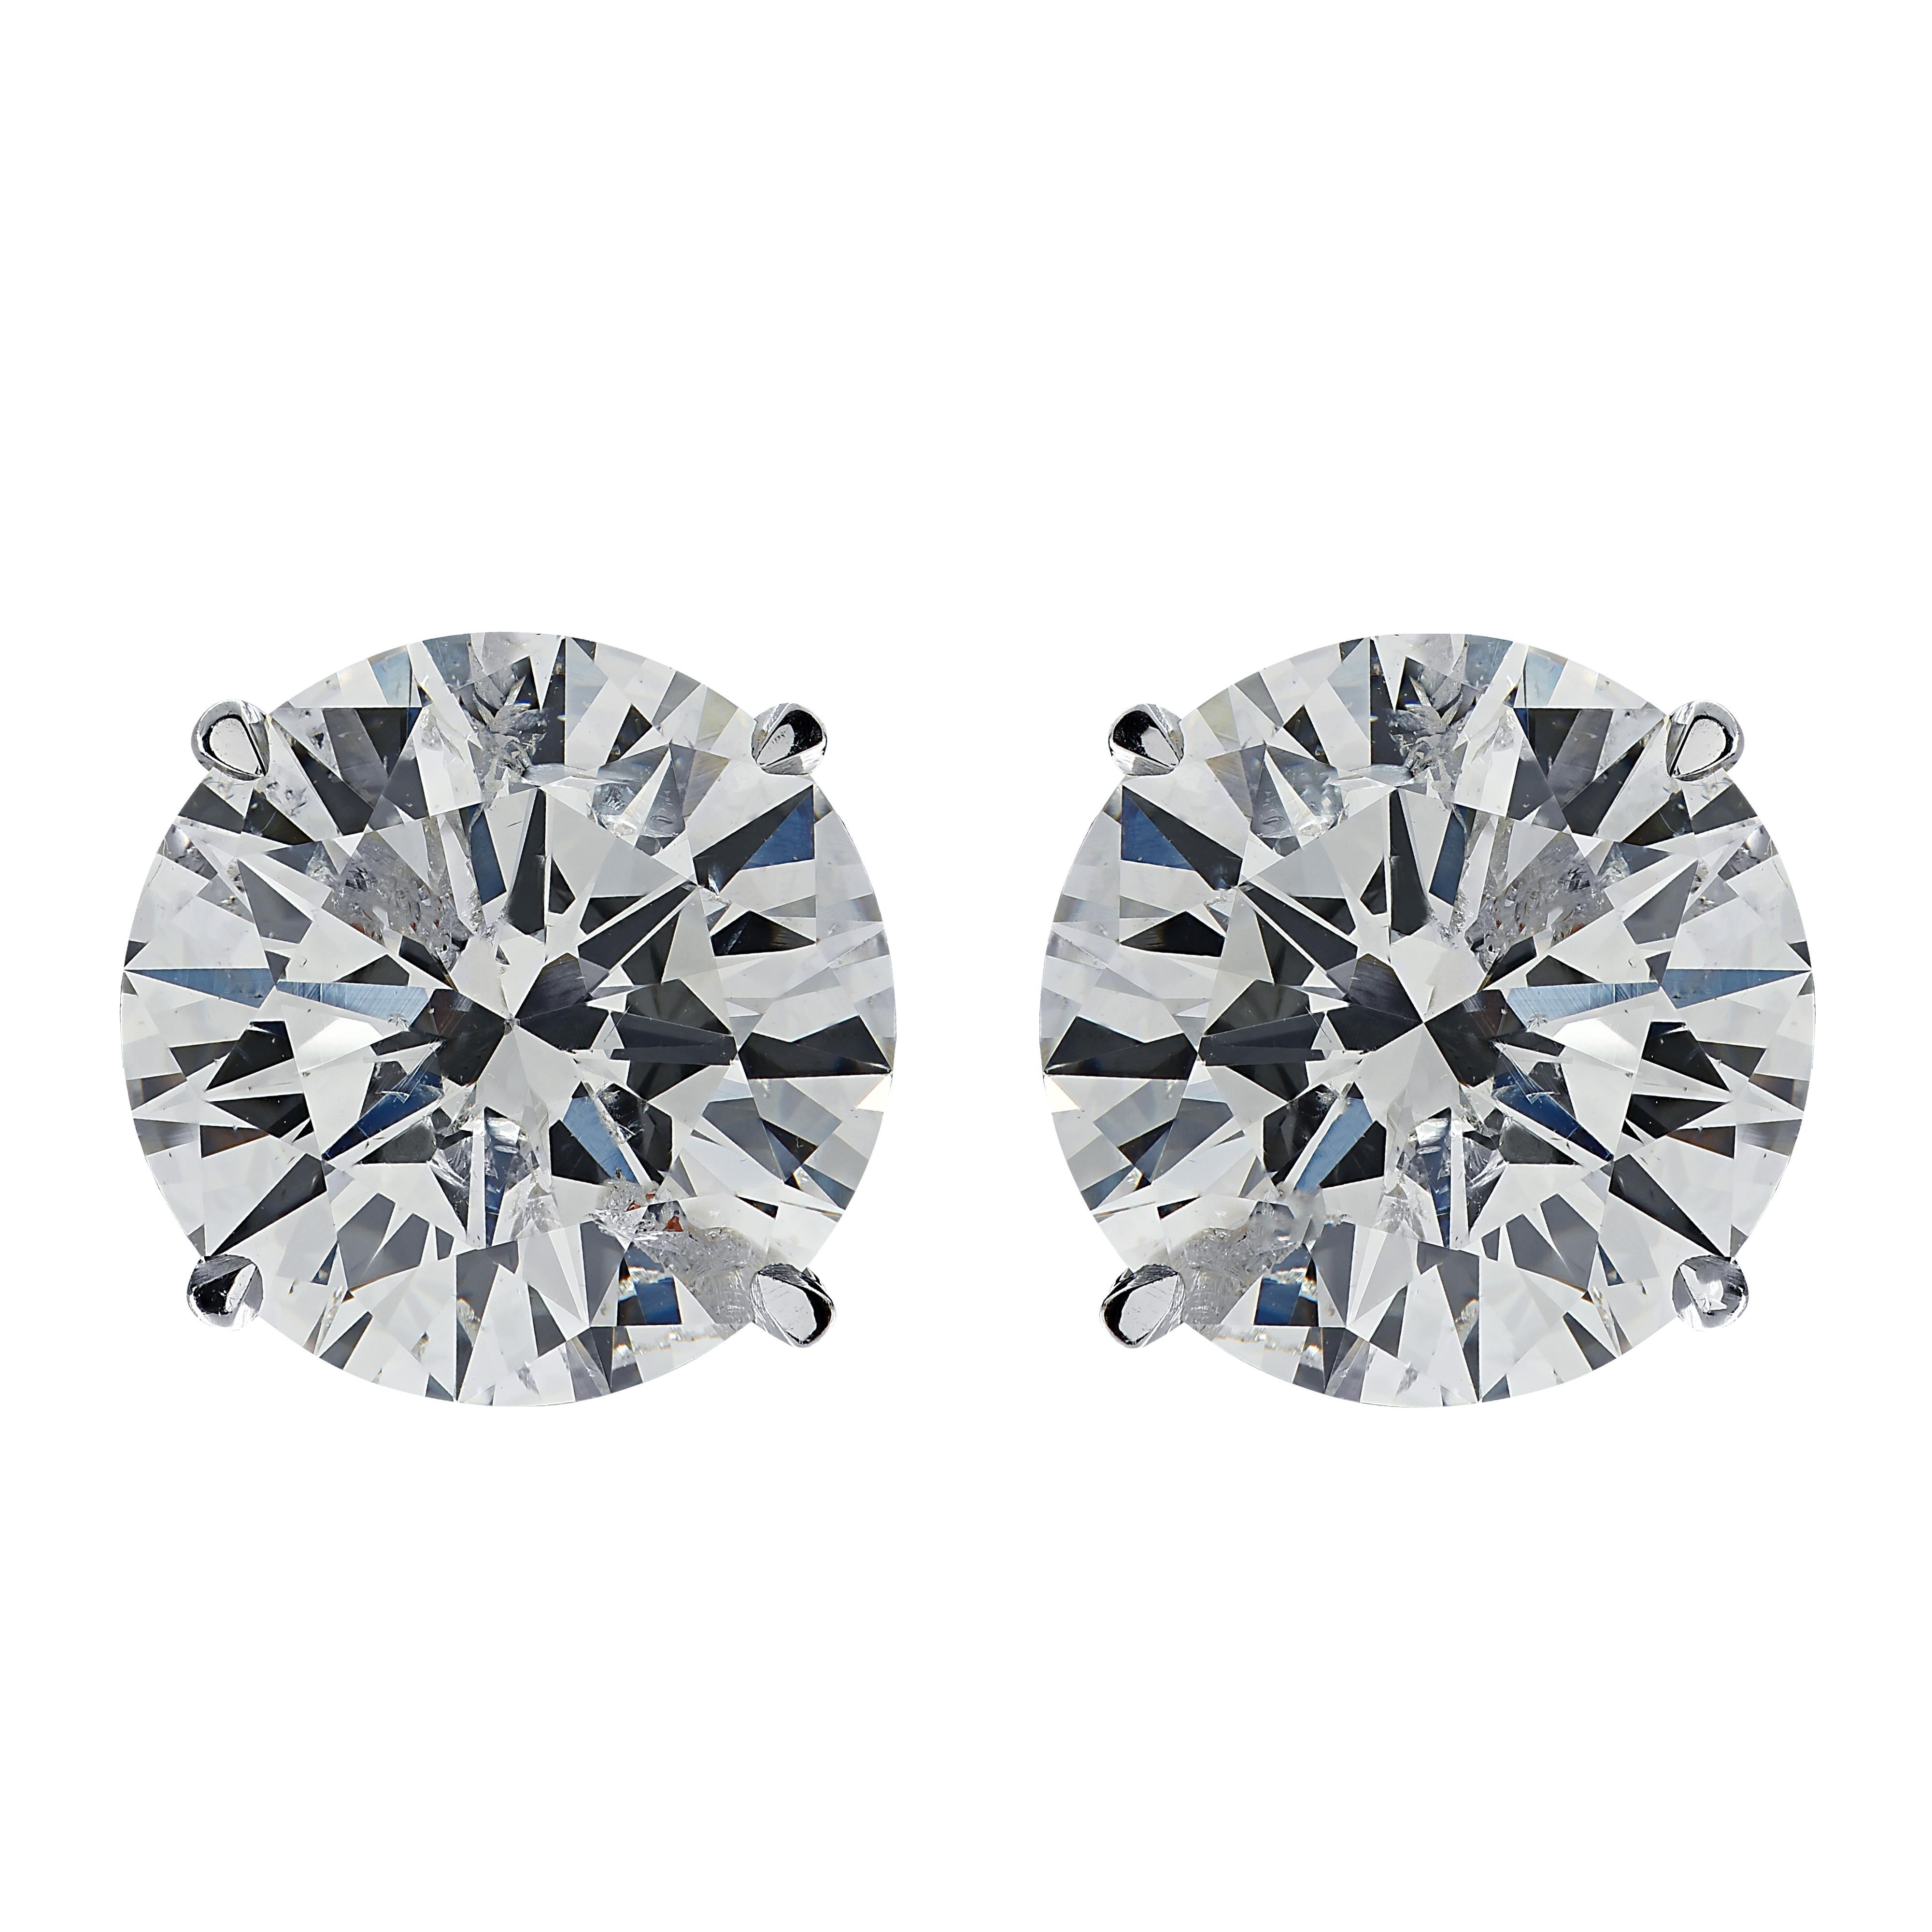 Modern Vivid Diamonds 4.44 Carat Diamond Solitaire Stud Earrings